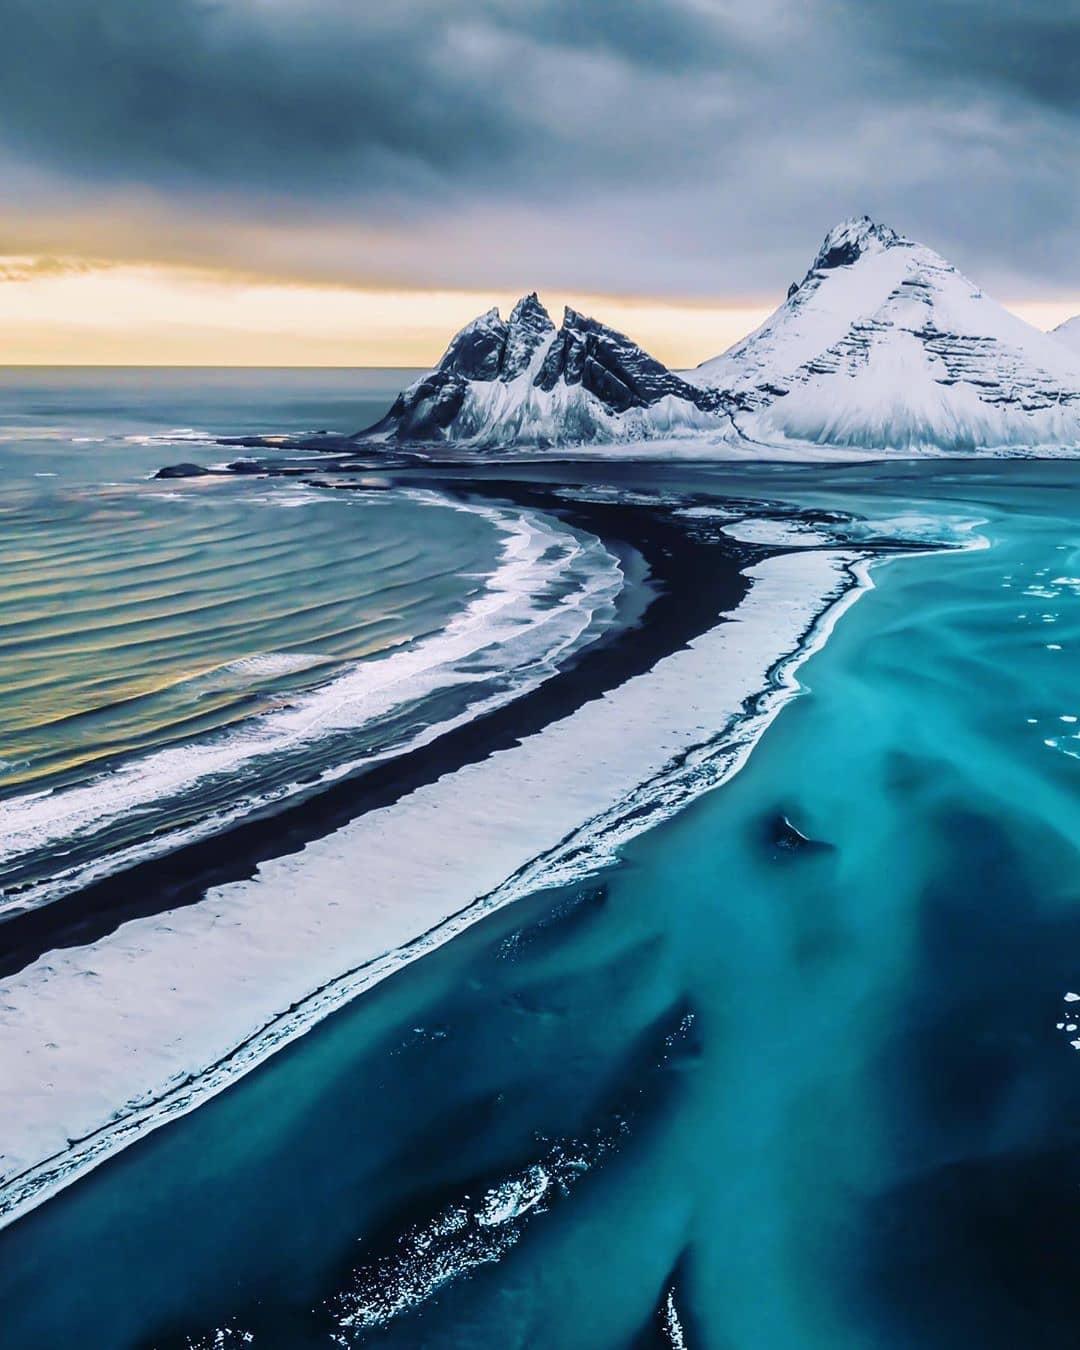  冰岛环礁湖，来自摄影师Sigurour Helgason。 